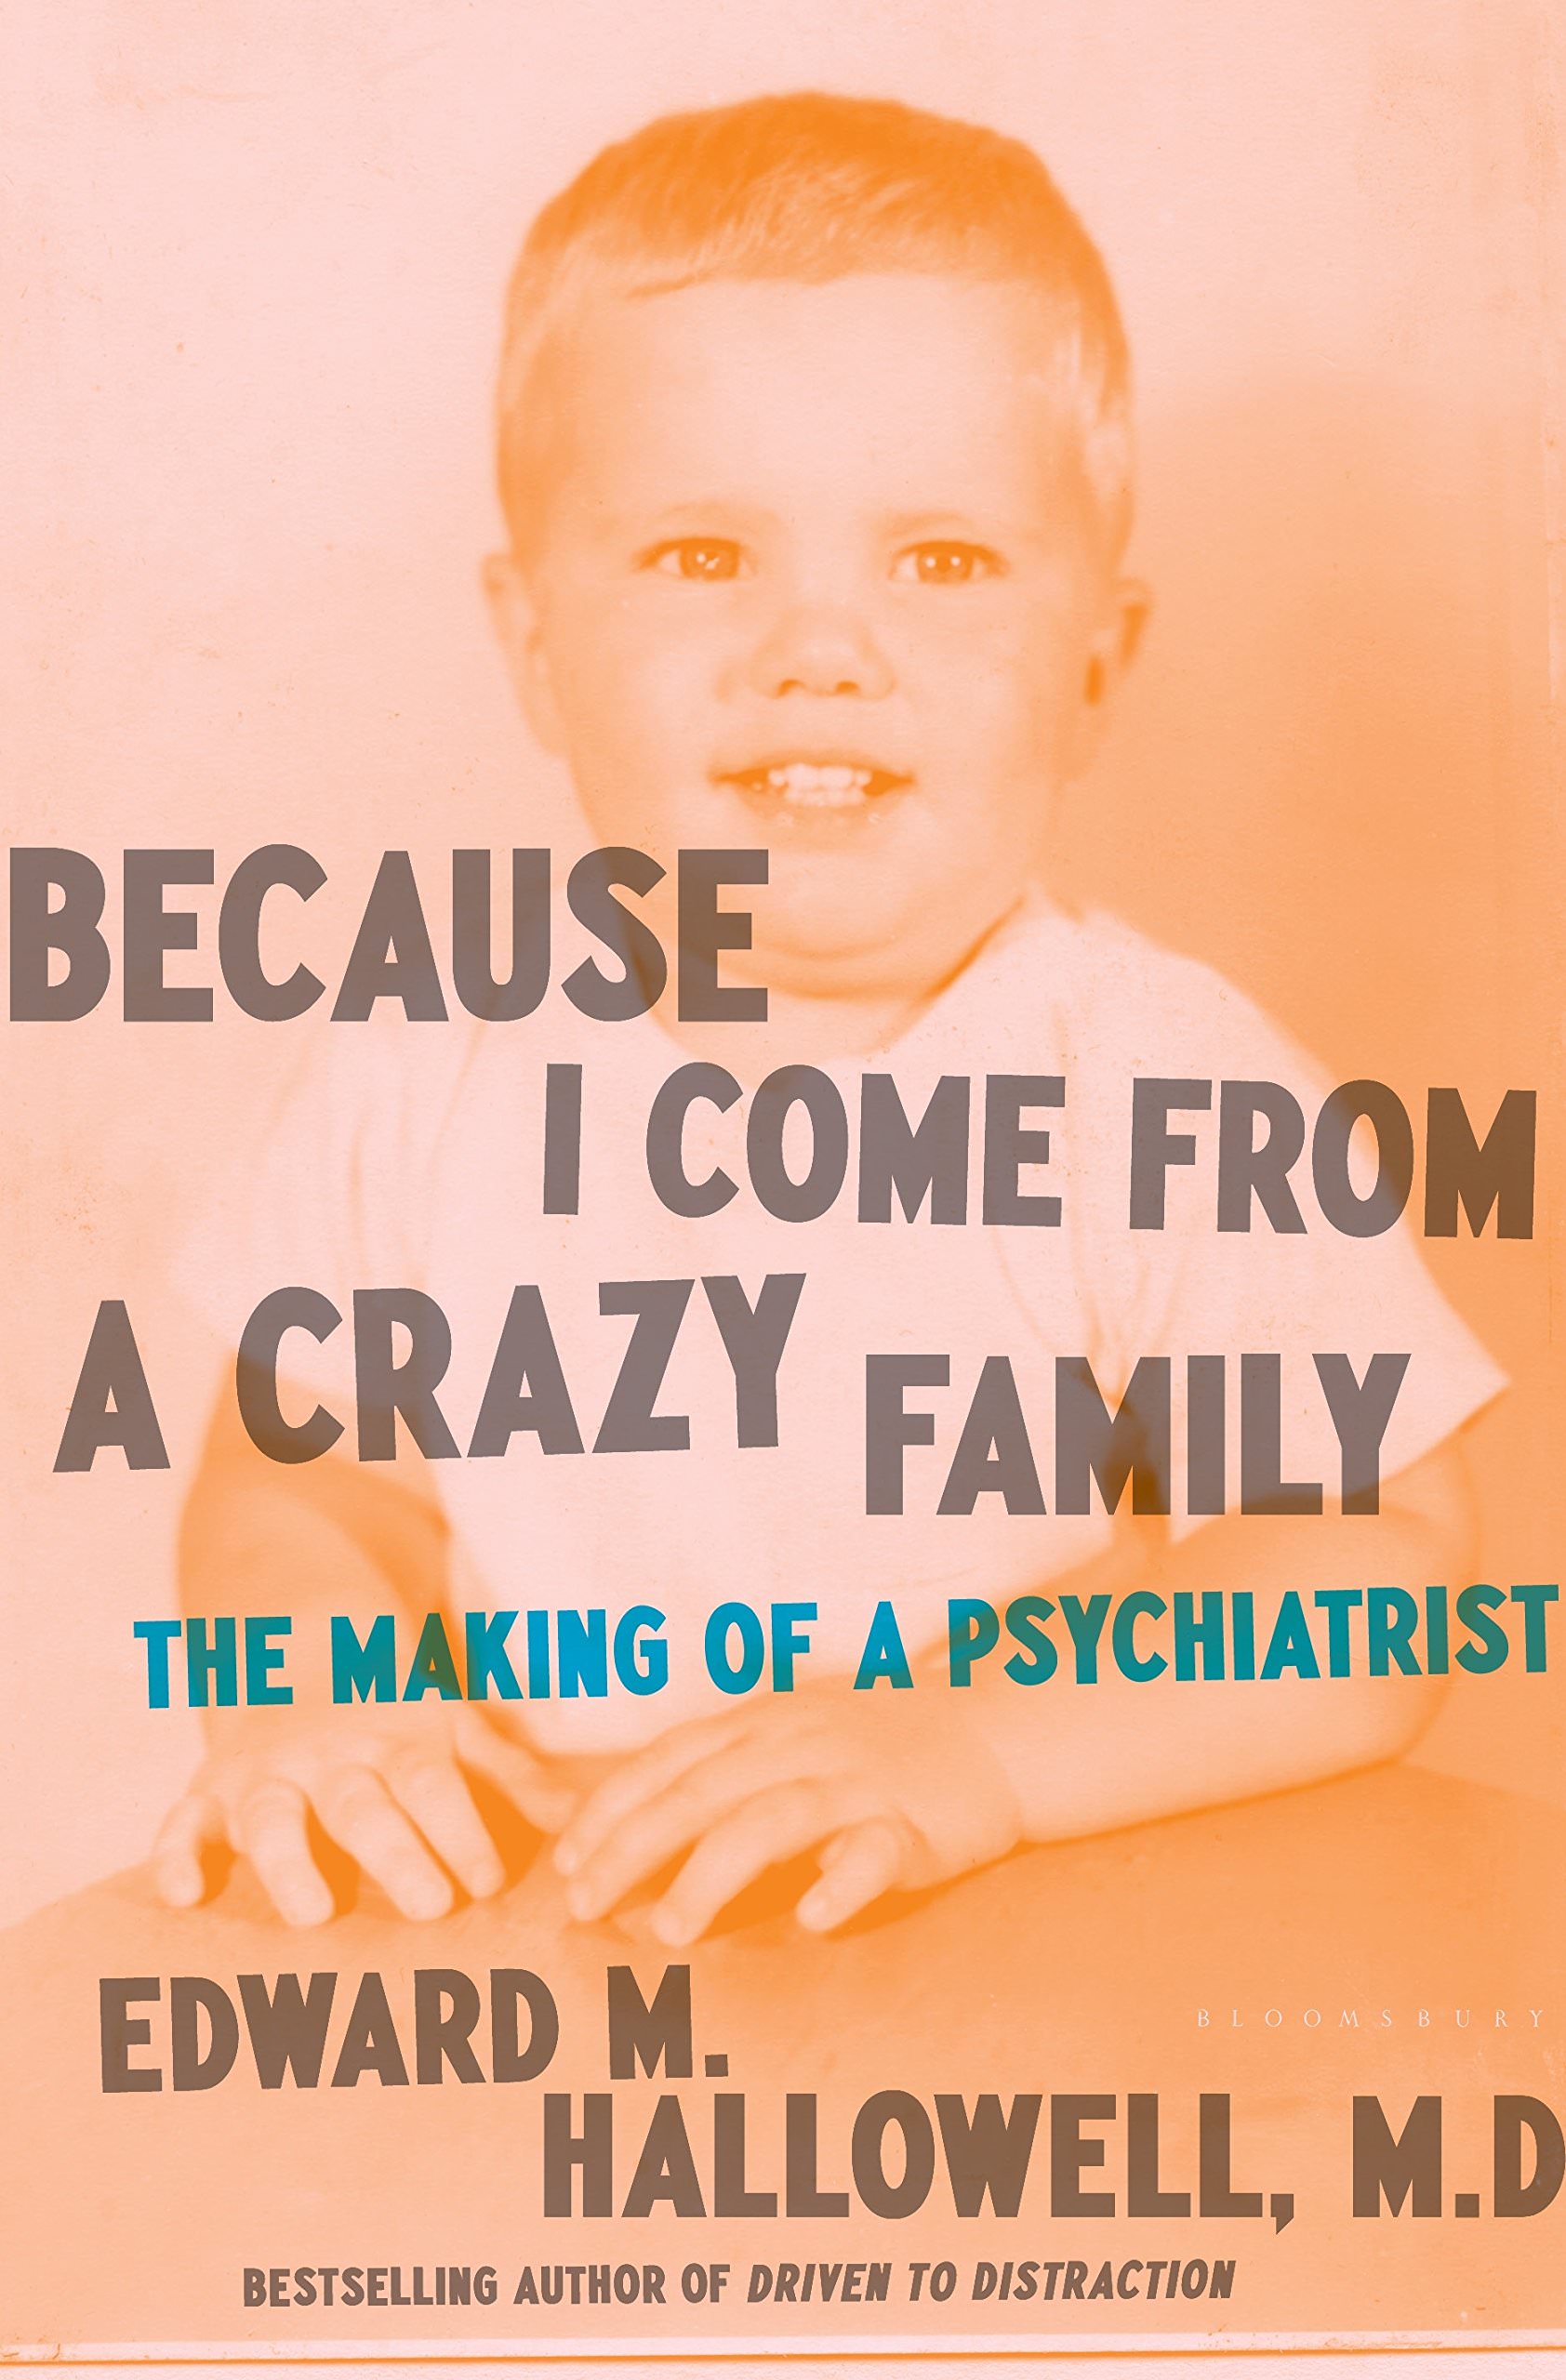 My Family Was Crazy, So Now I'm a Psychiatrist by 